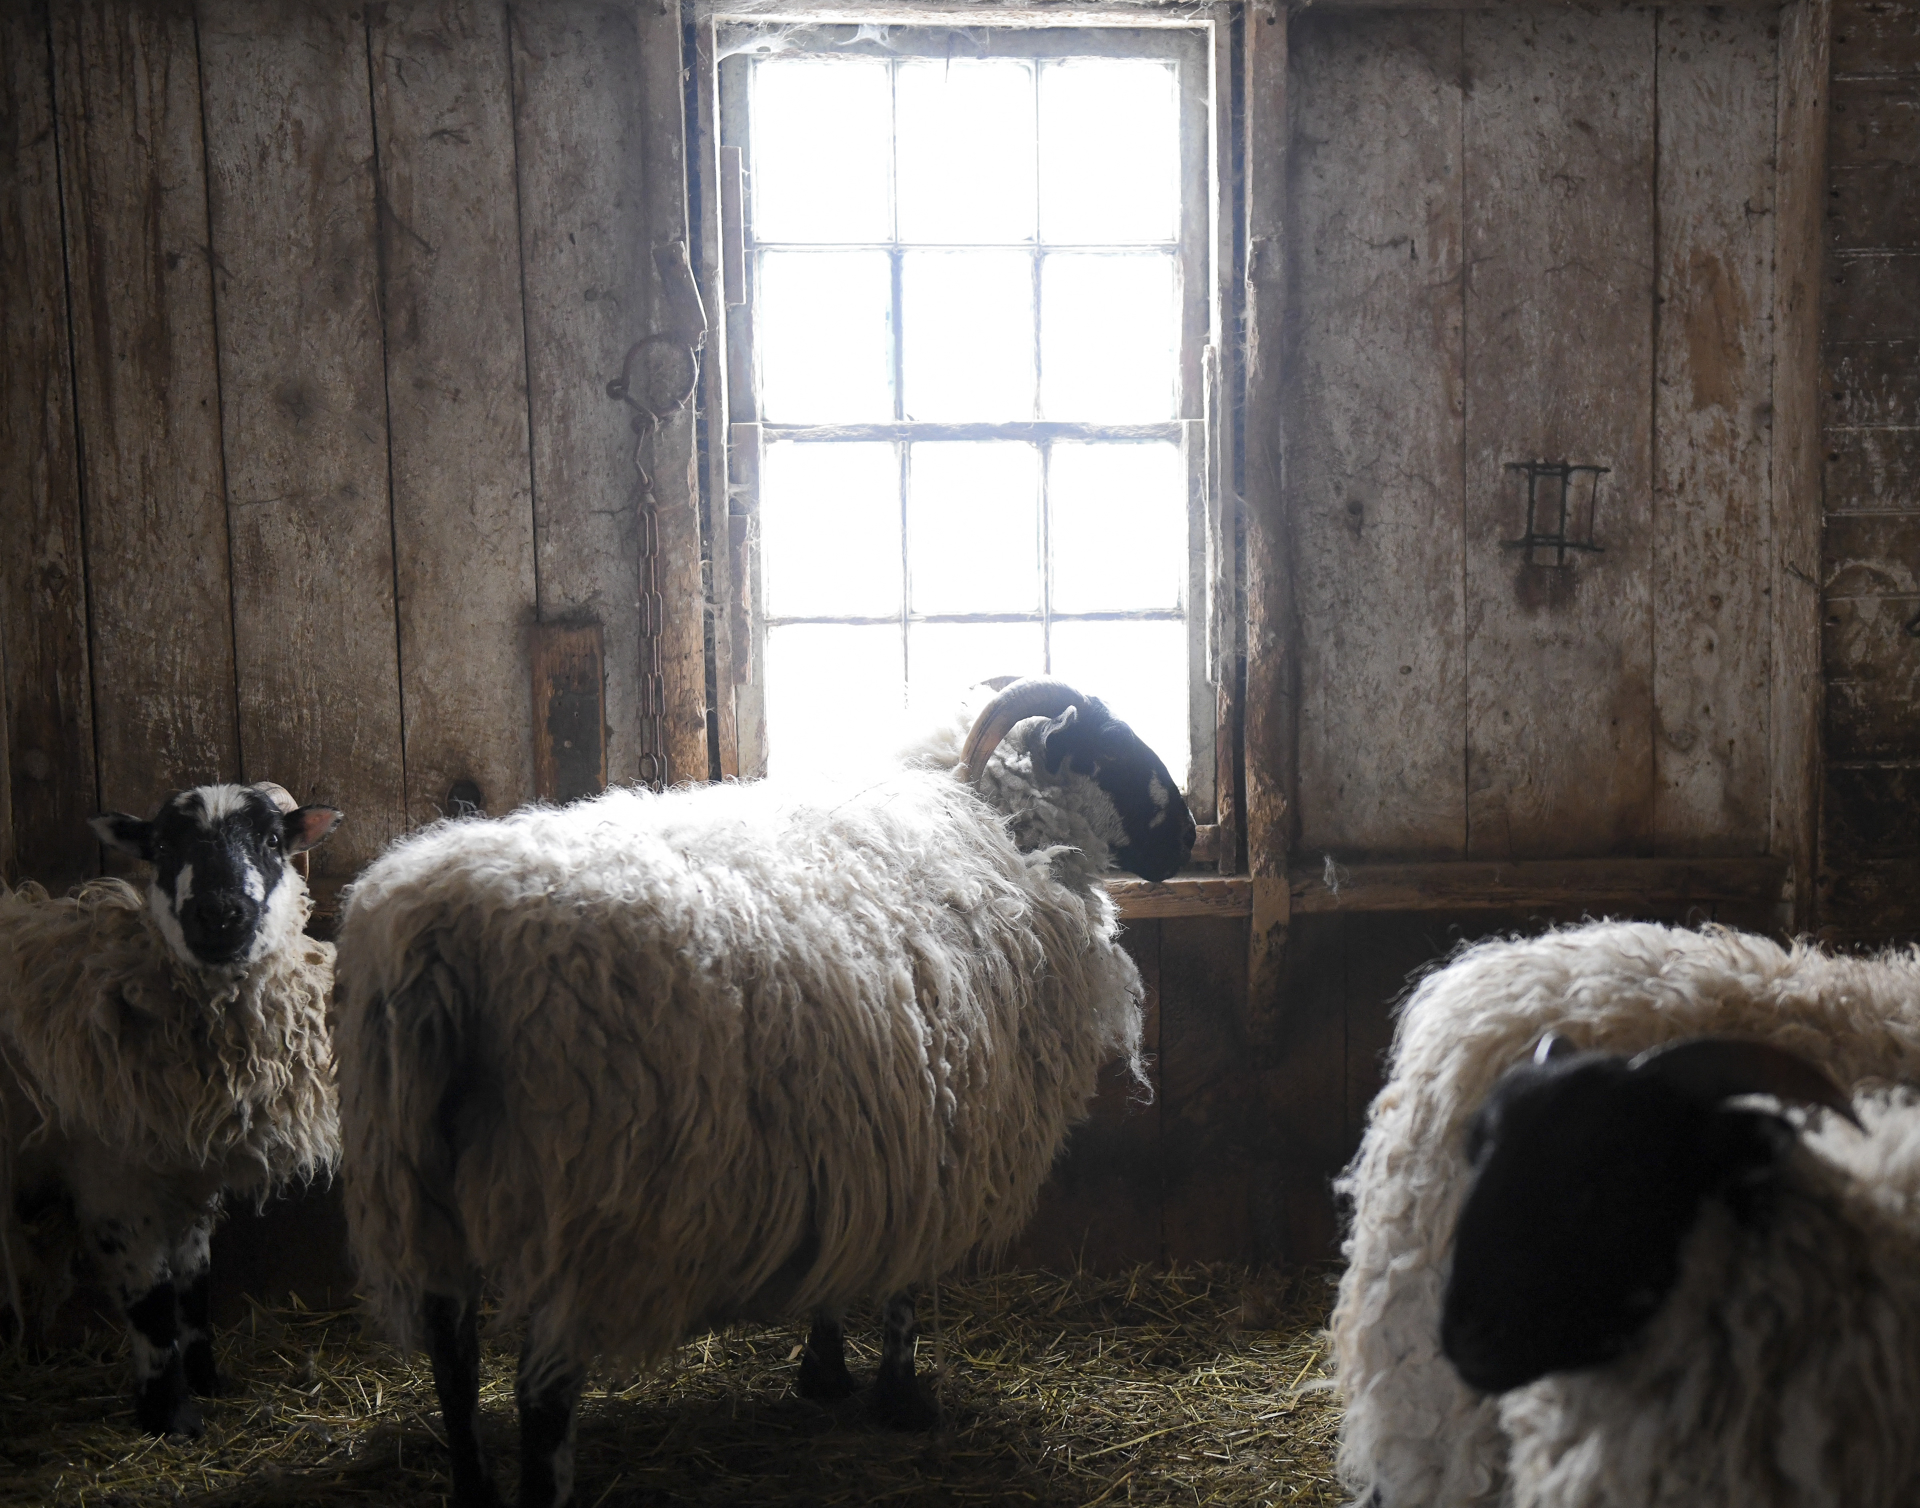 Sheep in Barn Window by Nina Fuller